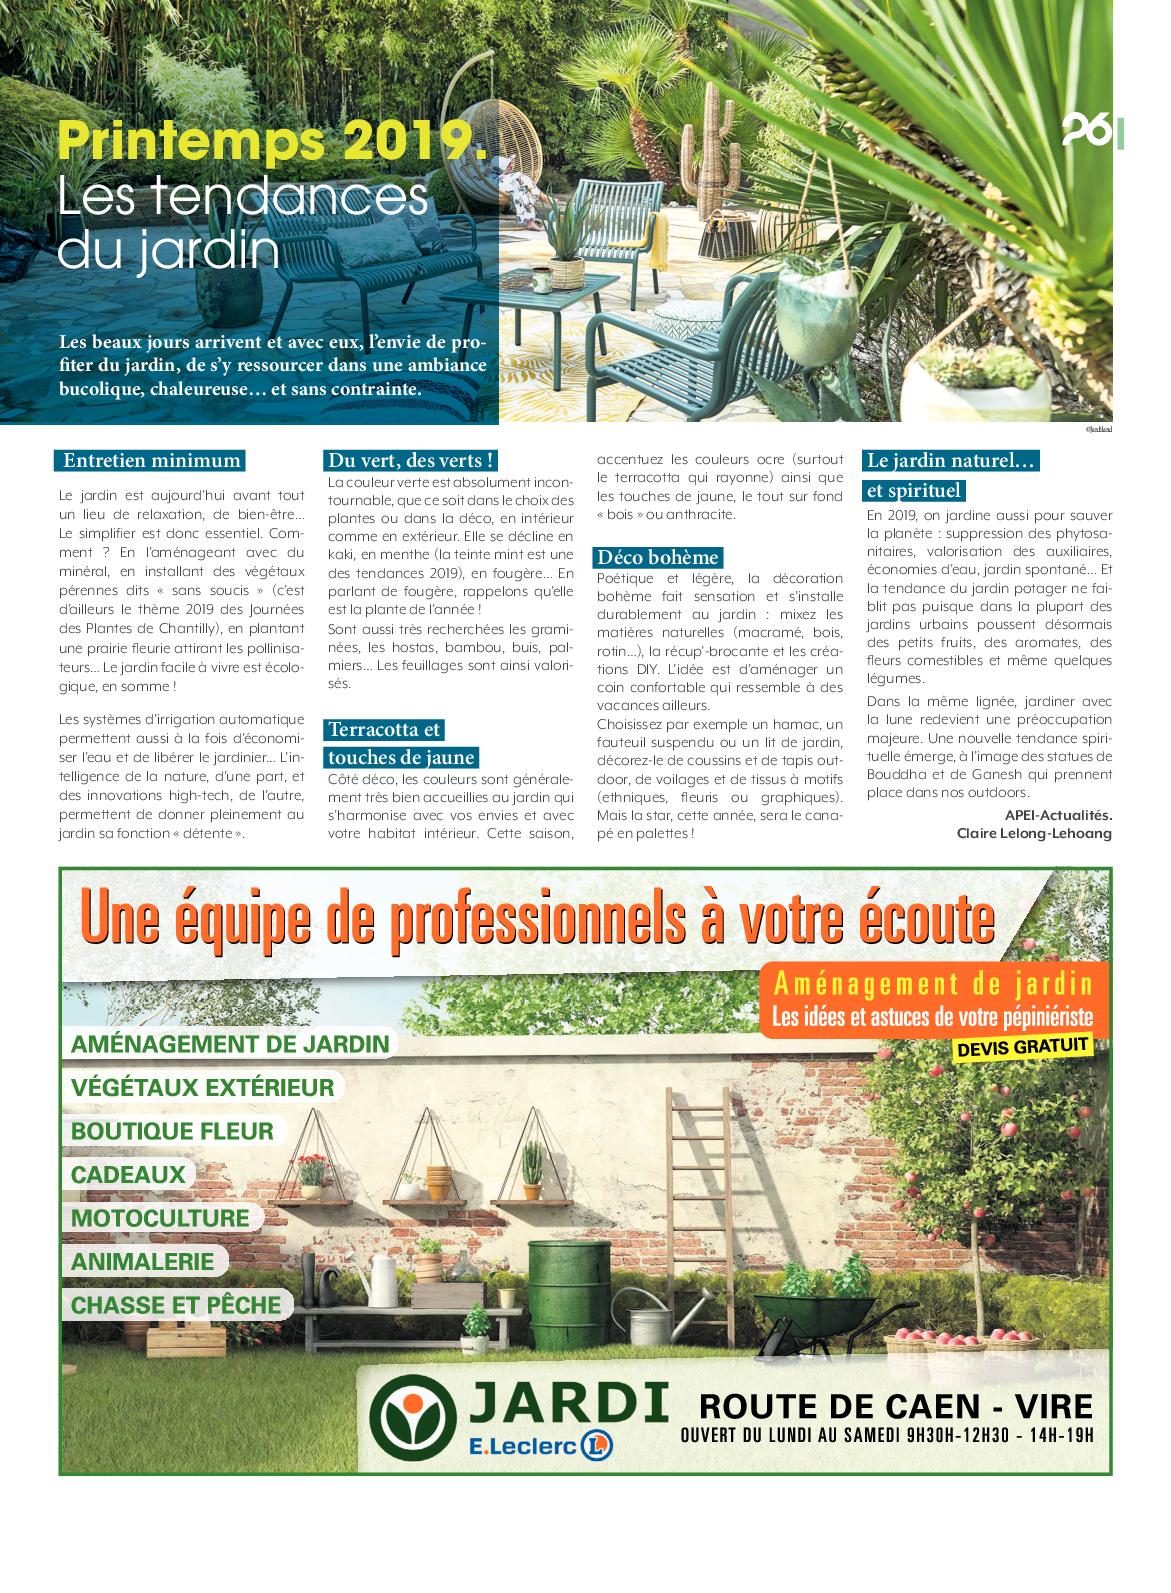 Salon De Jardin Leclerc 2020 Frais Habitat Oc Mars 2019 Calameo Downloader